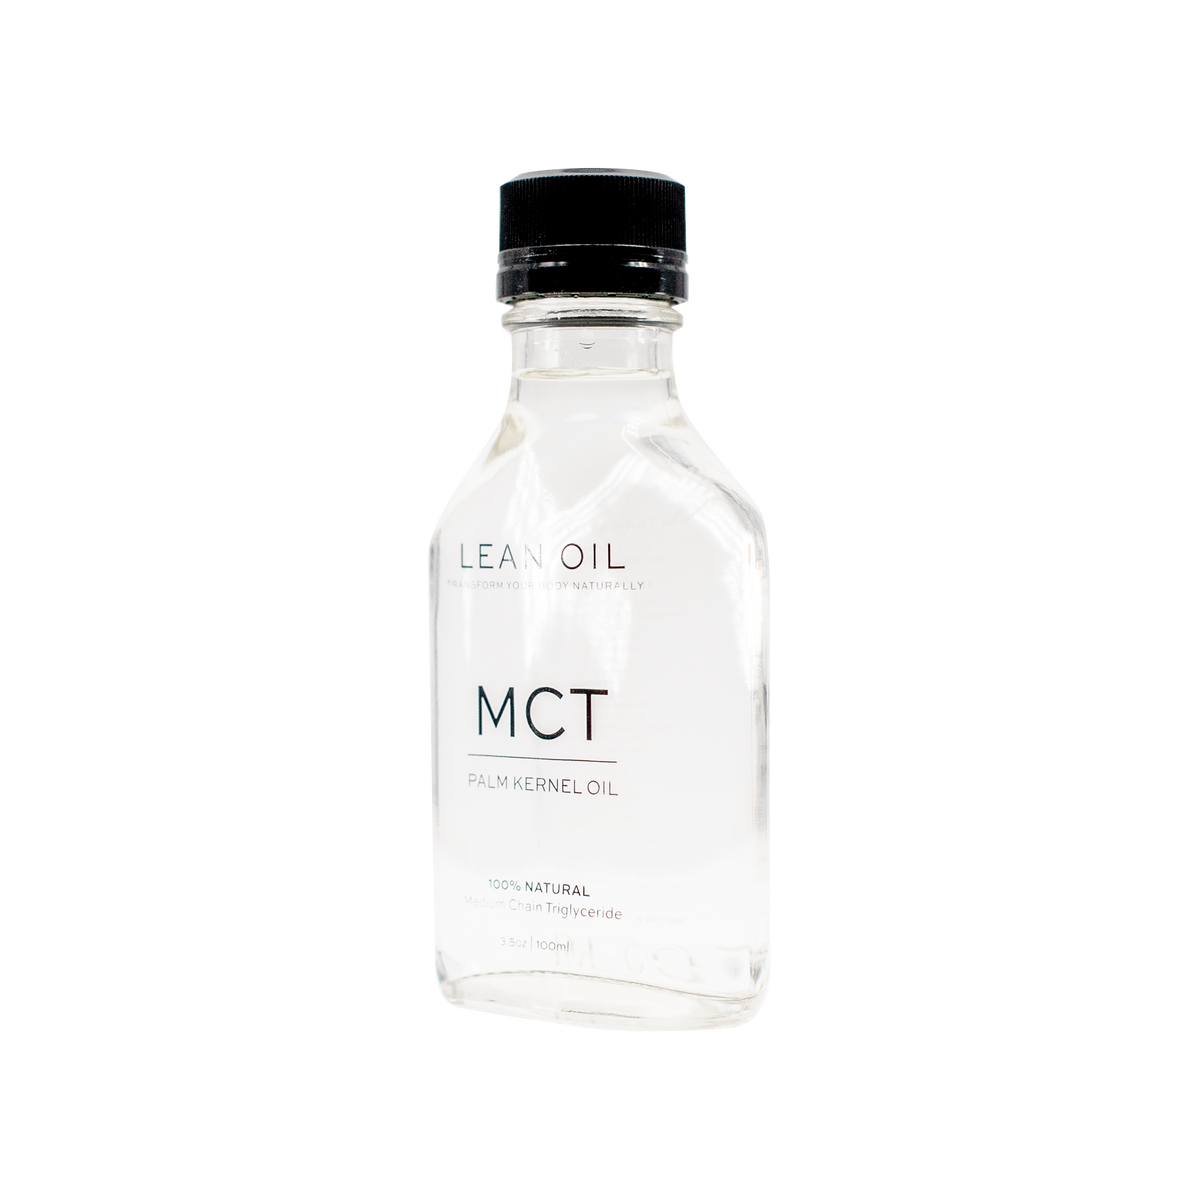 LEAN OIL™ MCT Palm Kernel Oil